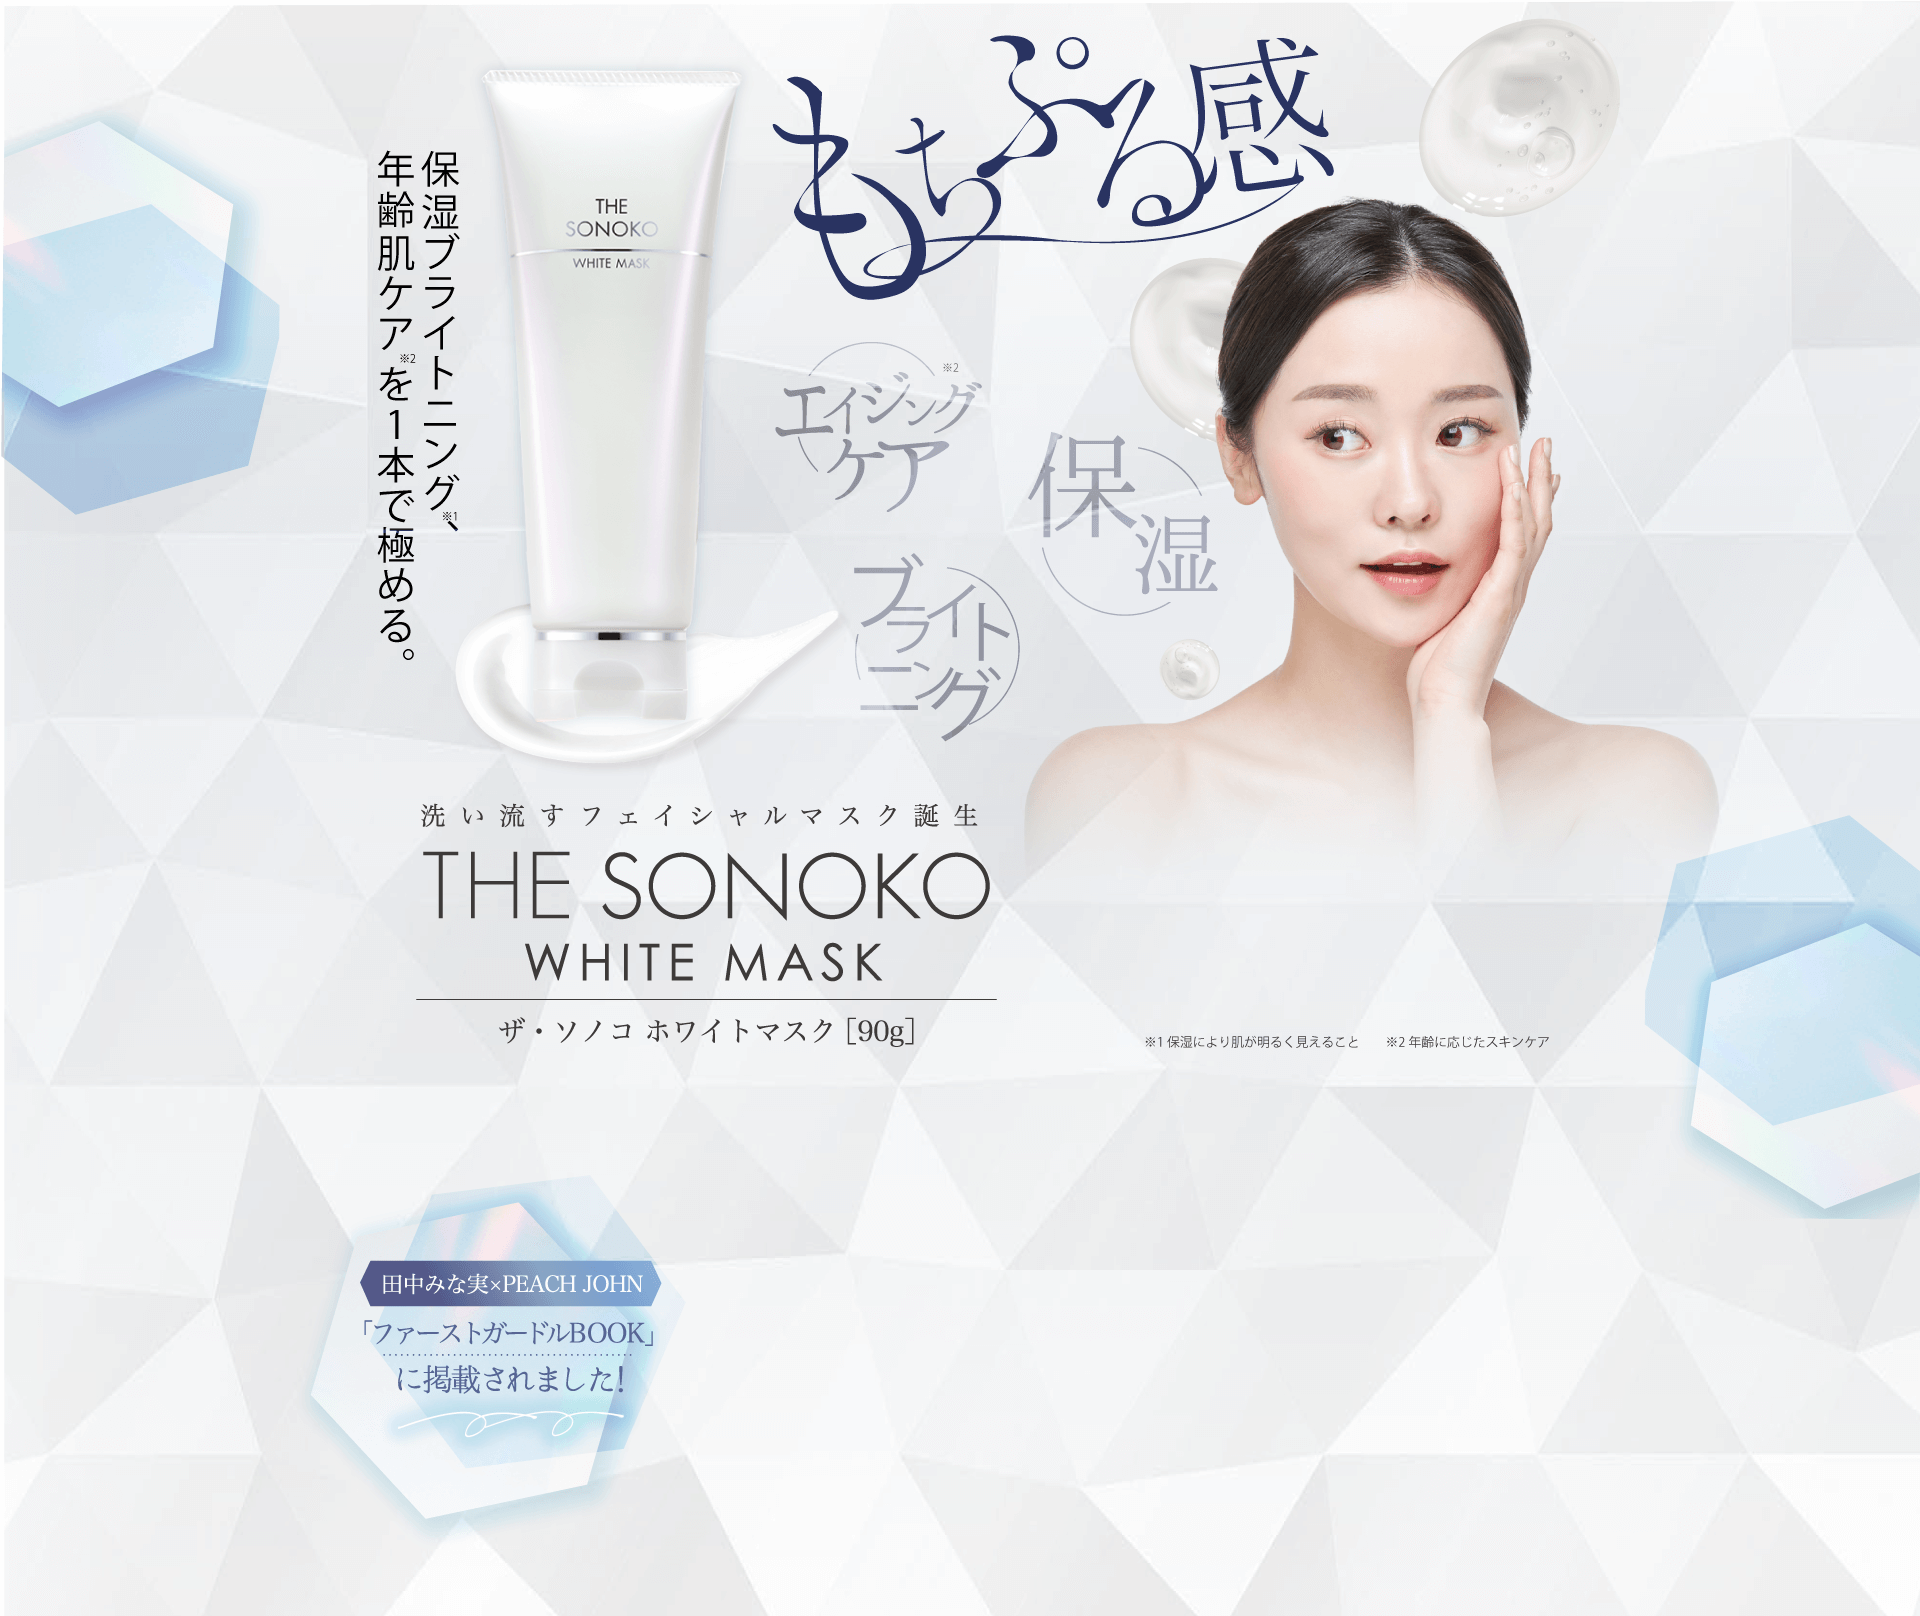 THE SONOKO WHITE MASK